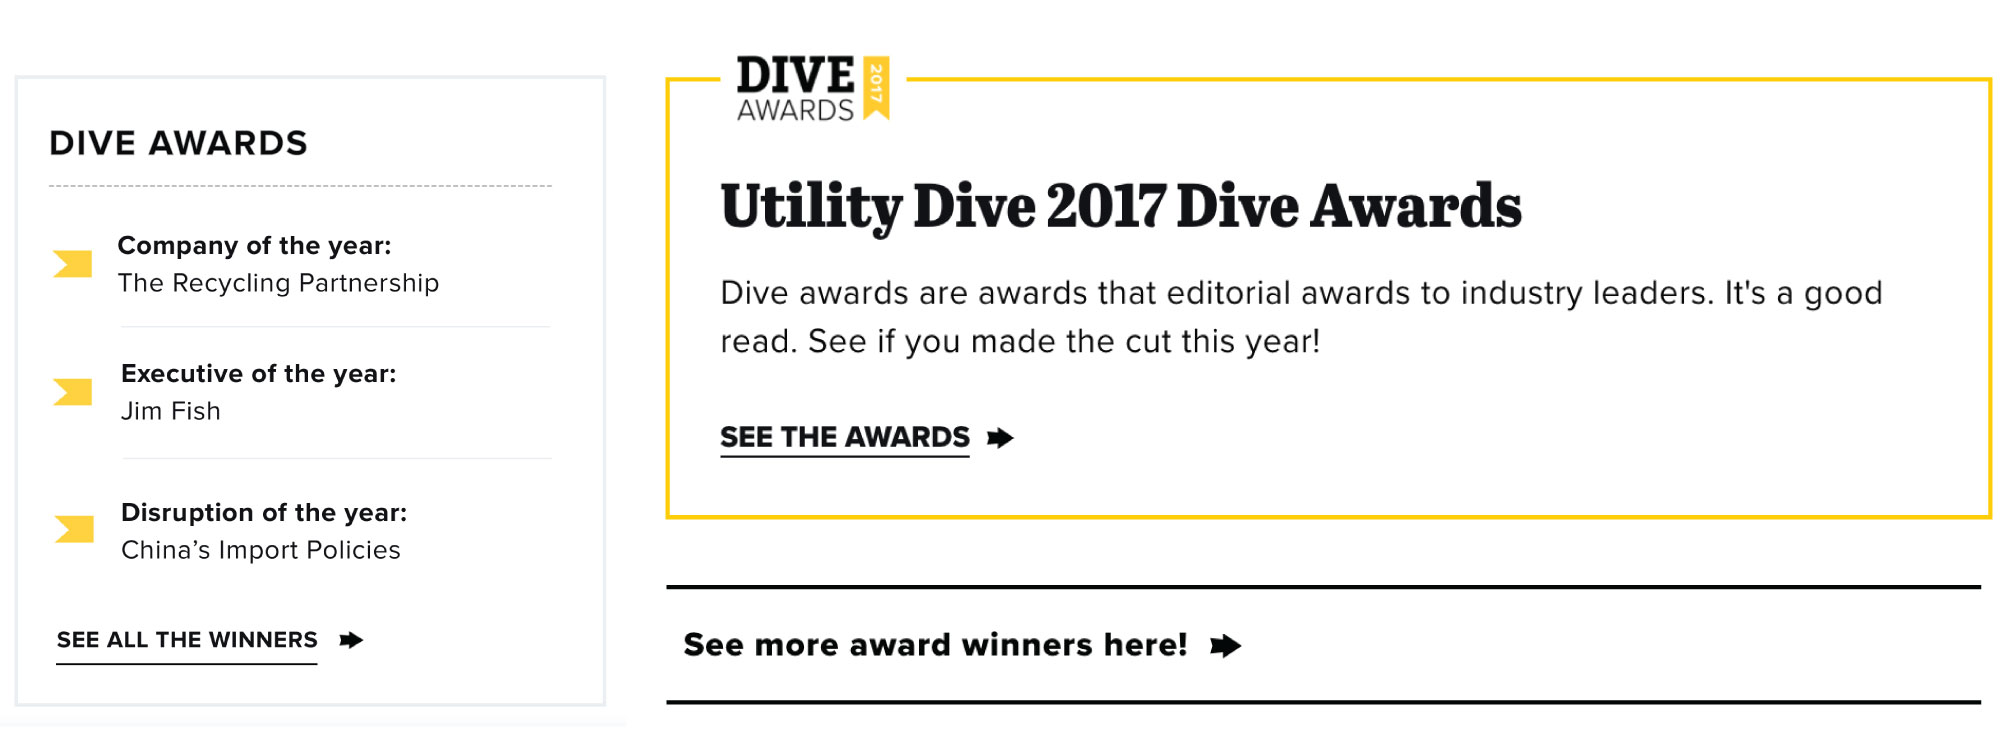 Dive Awards Ads